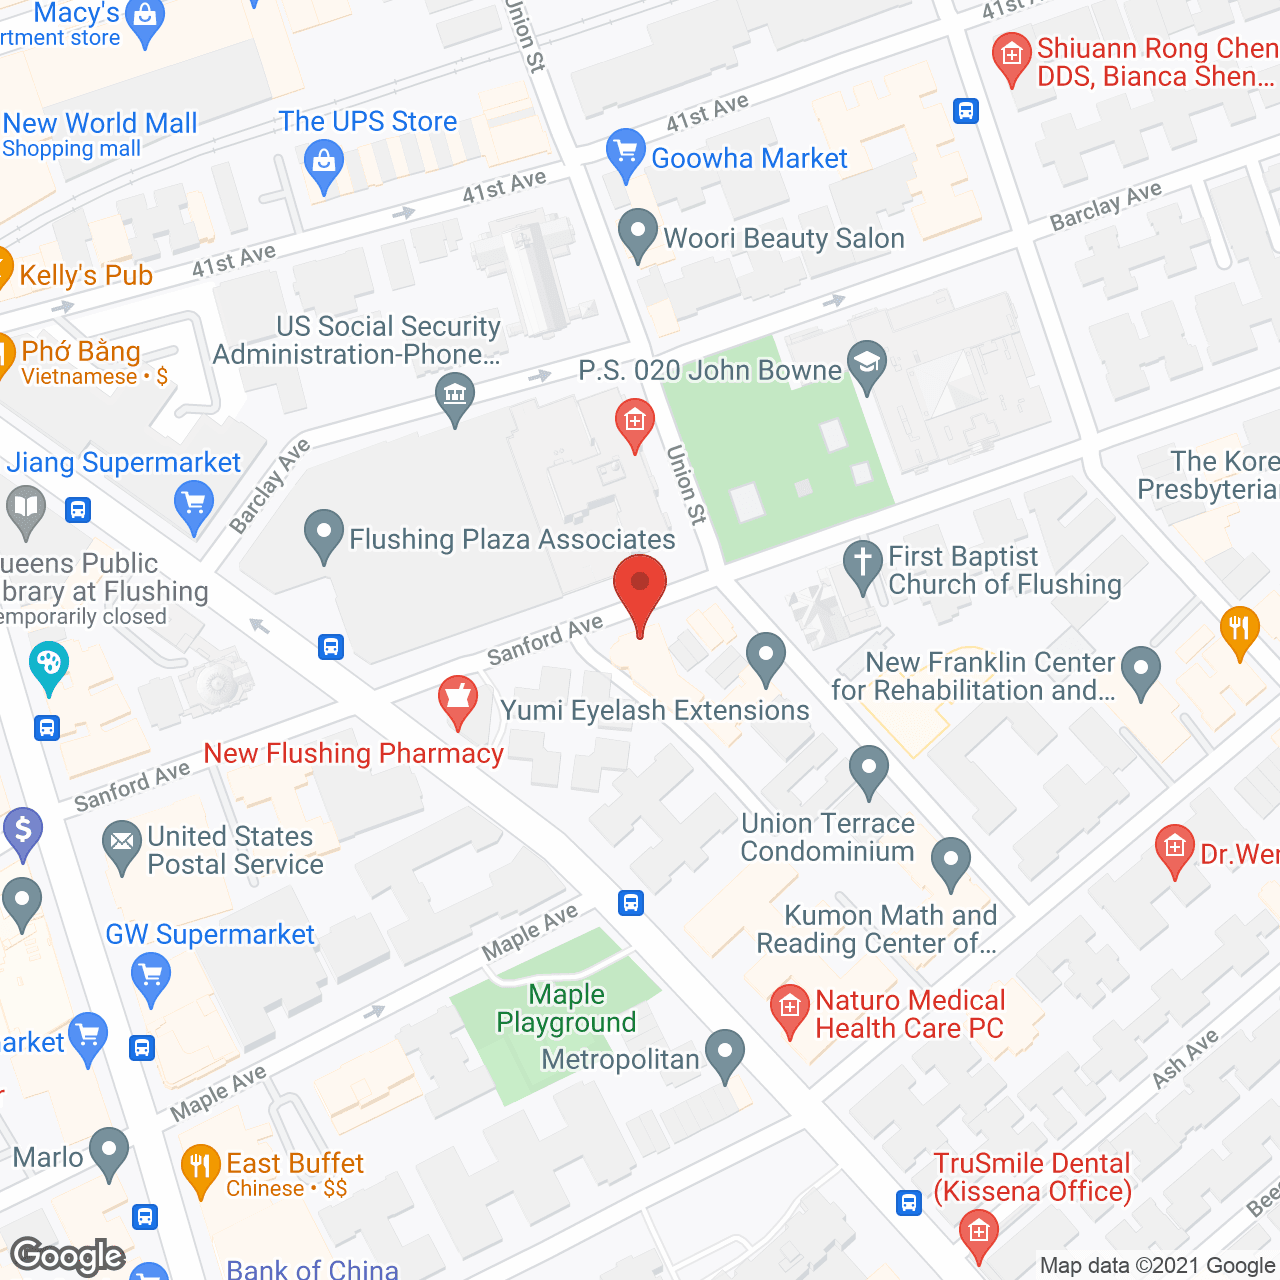 Sanford Home in google map